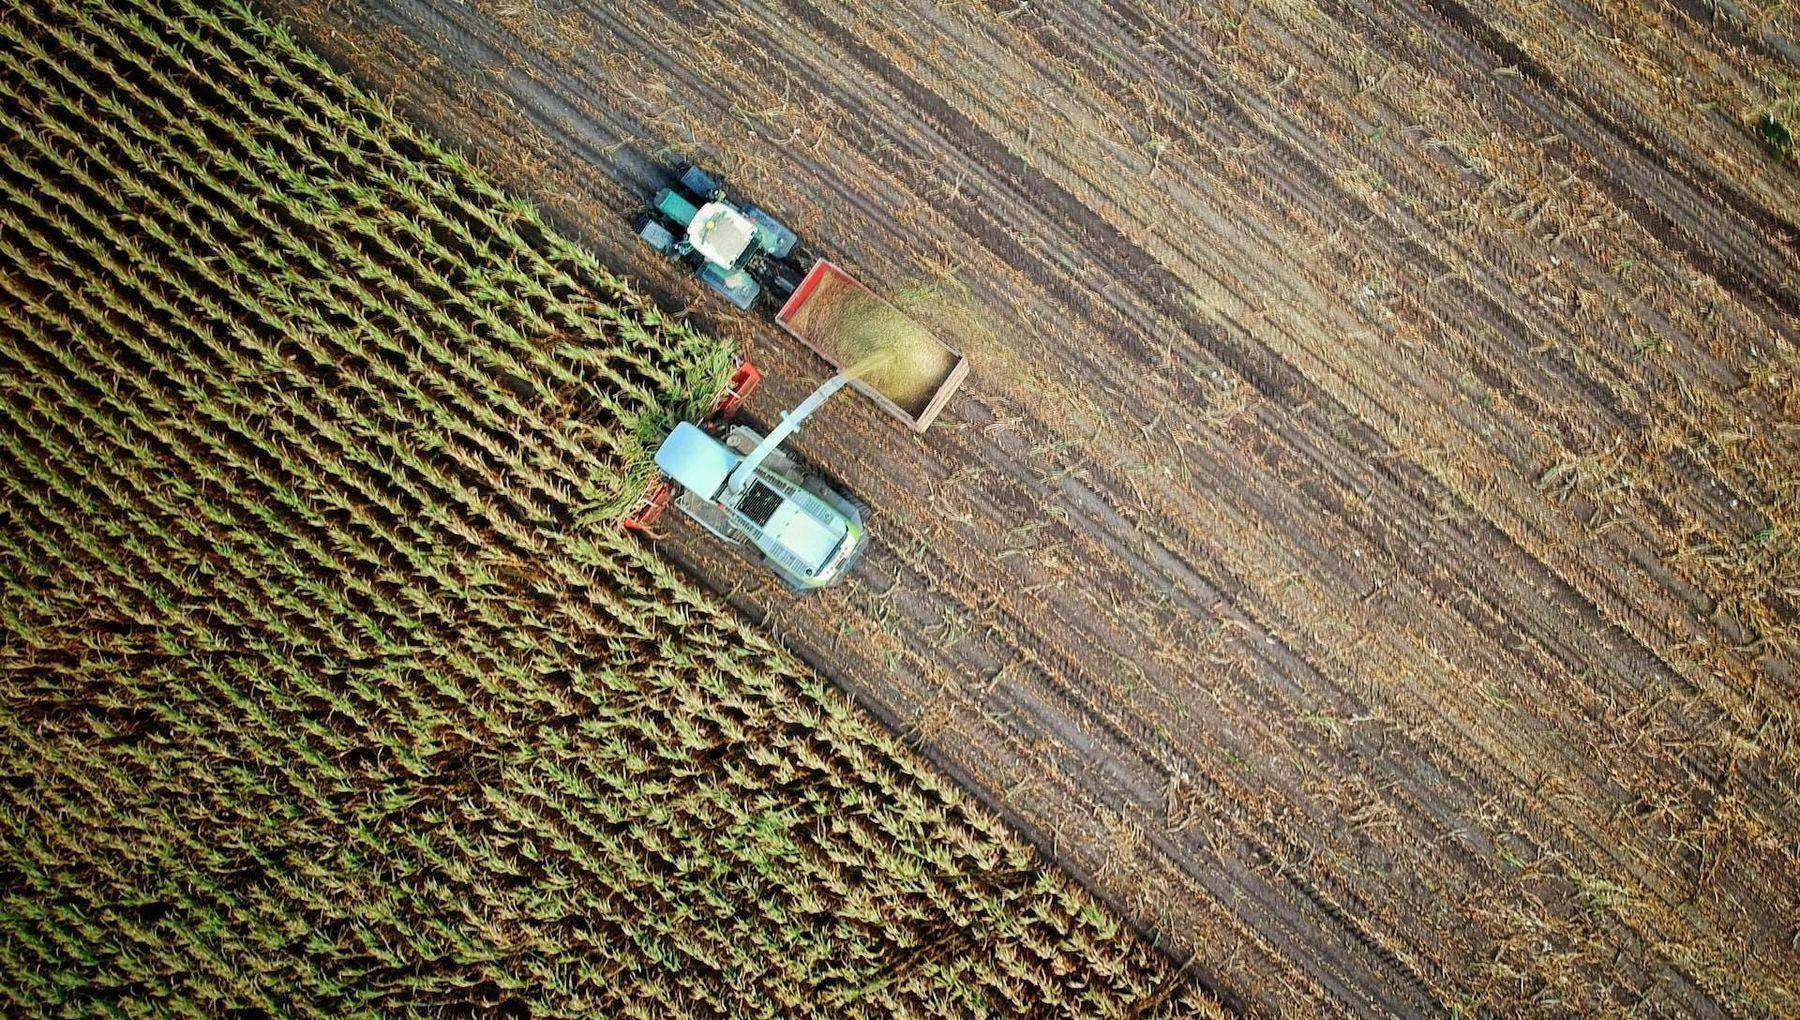 Aerial shot of two tractors harvesting crop